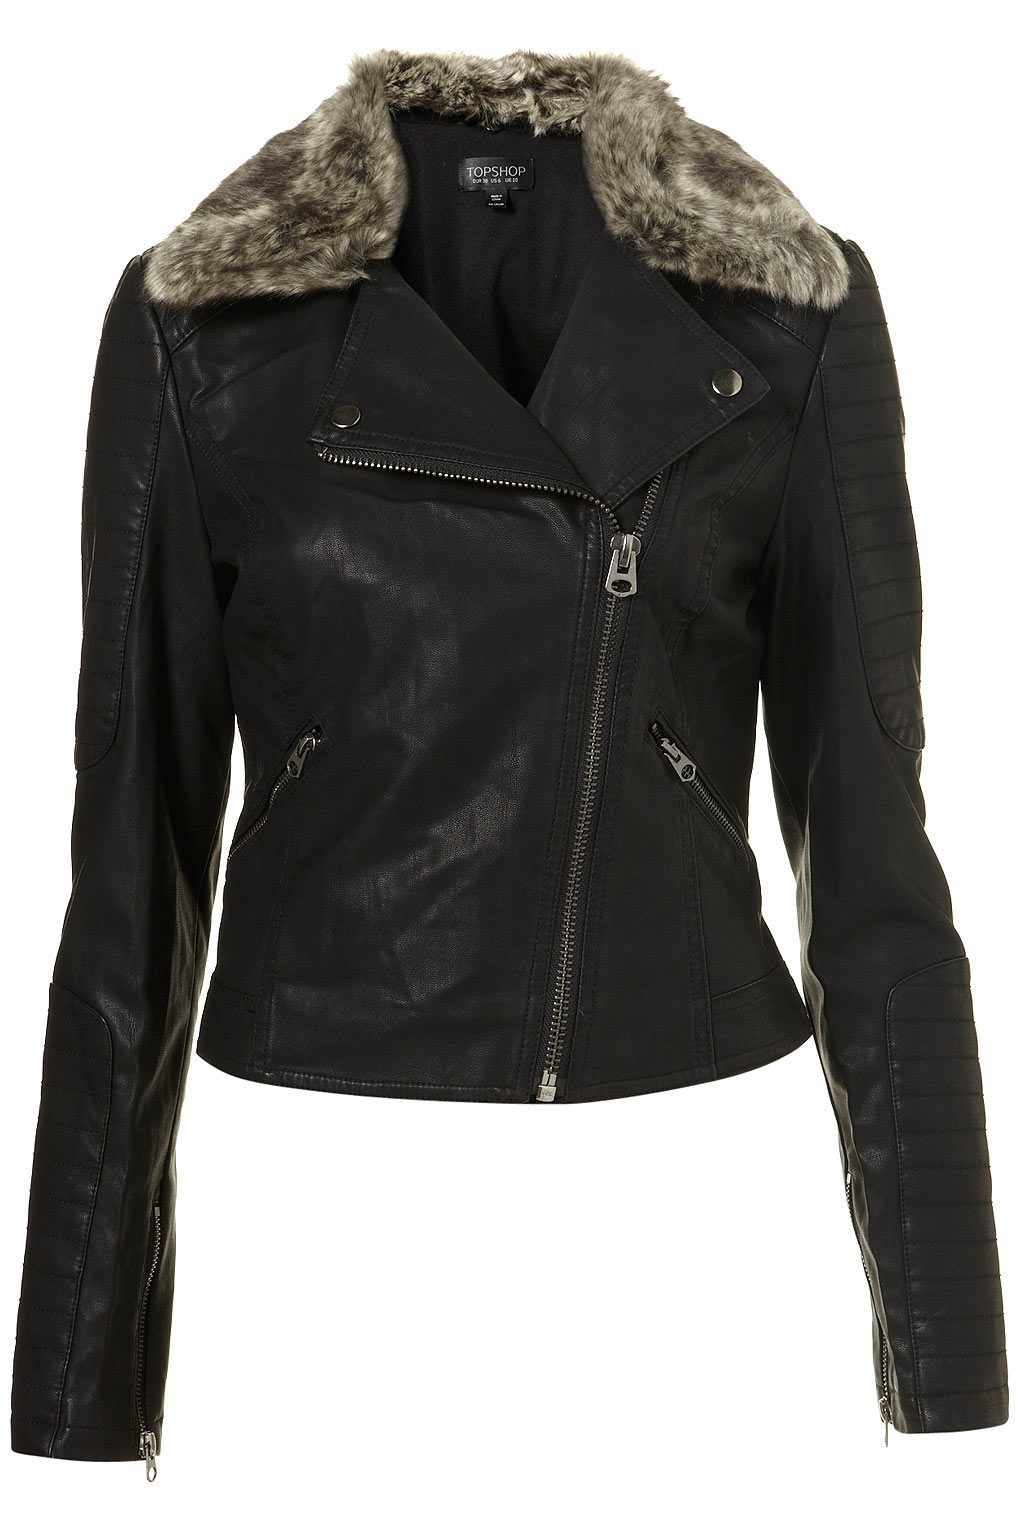 Lyst - Topshop Fur Collar Quilted Biker Jacket in Black